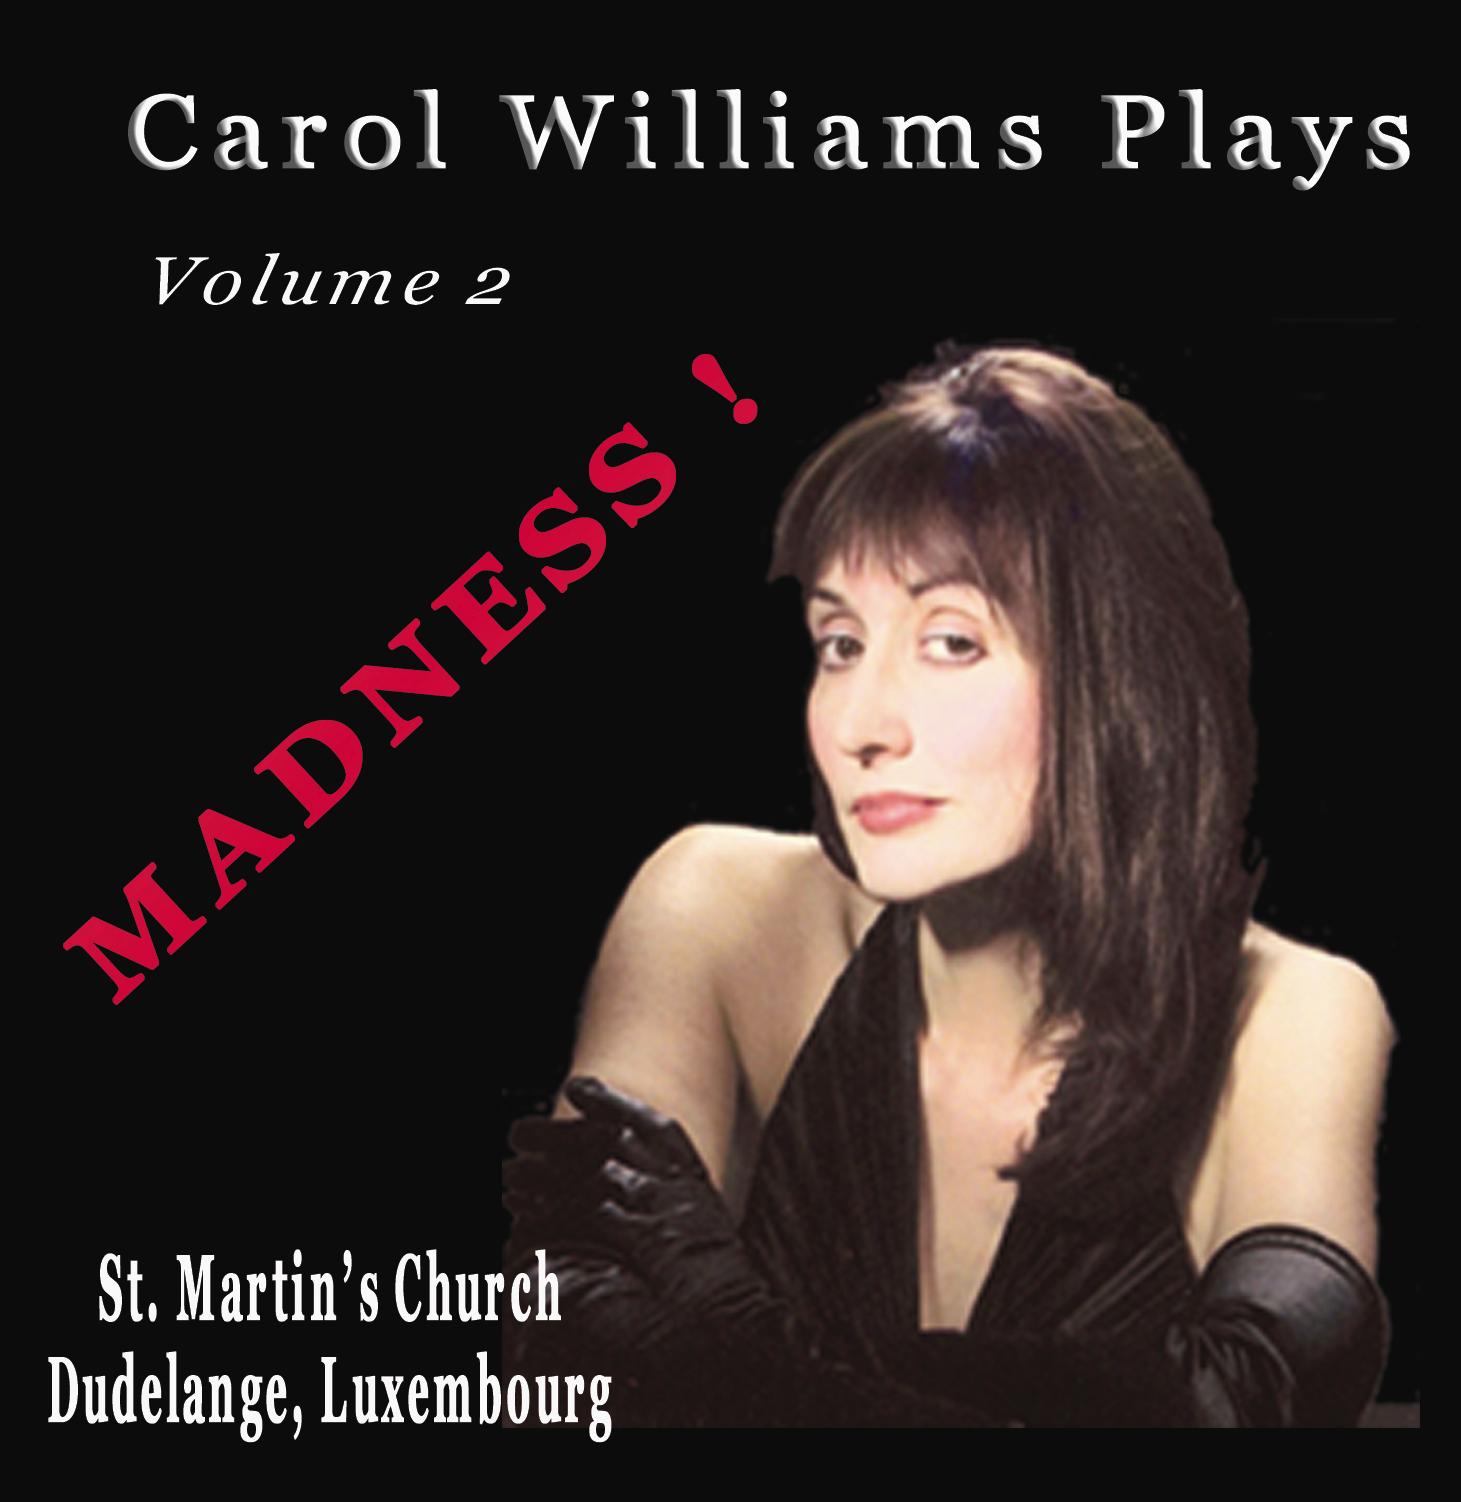 Carol Williams play Madness